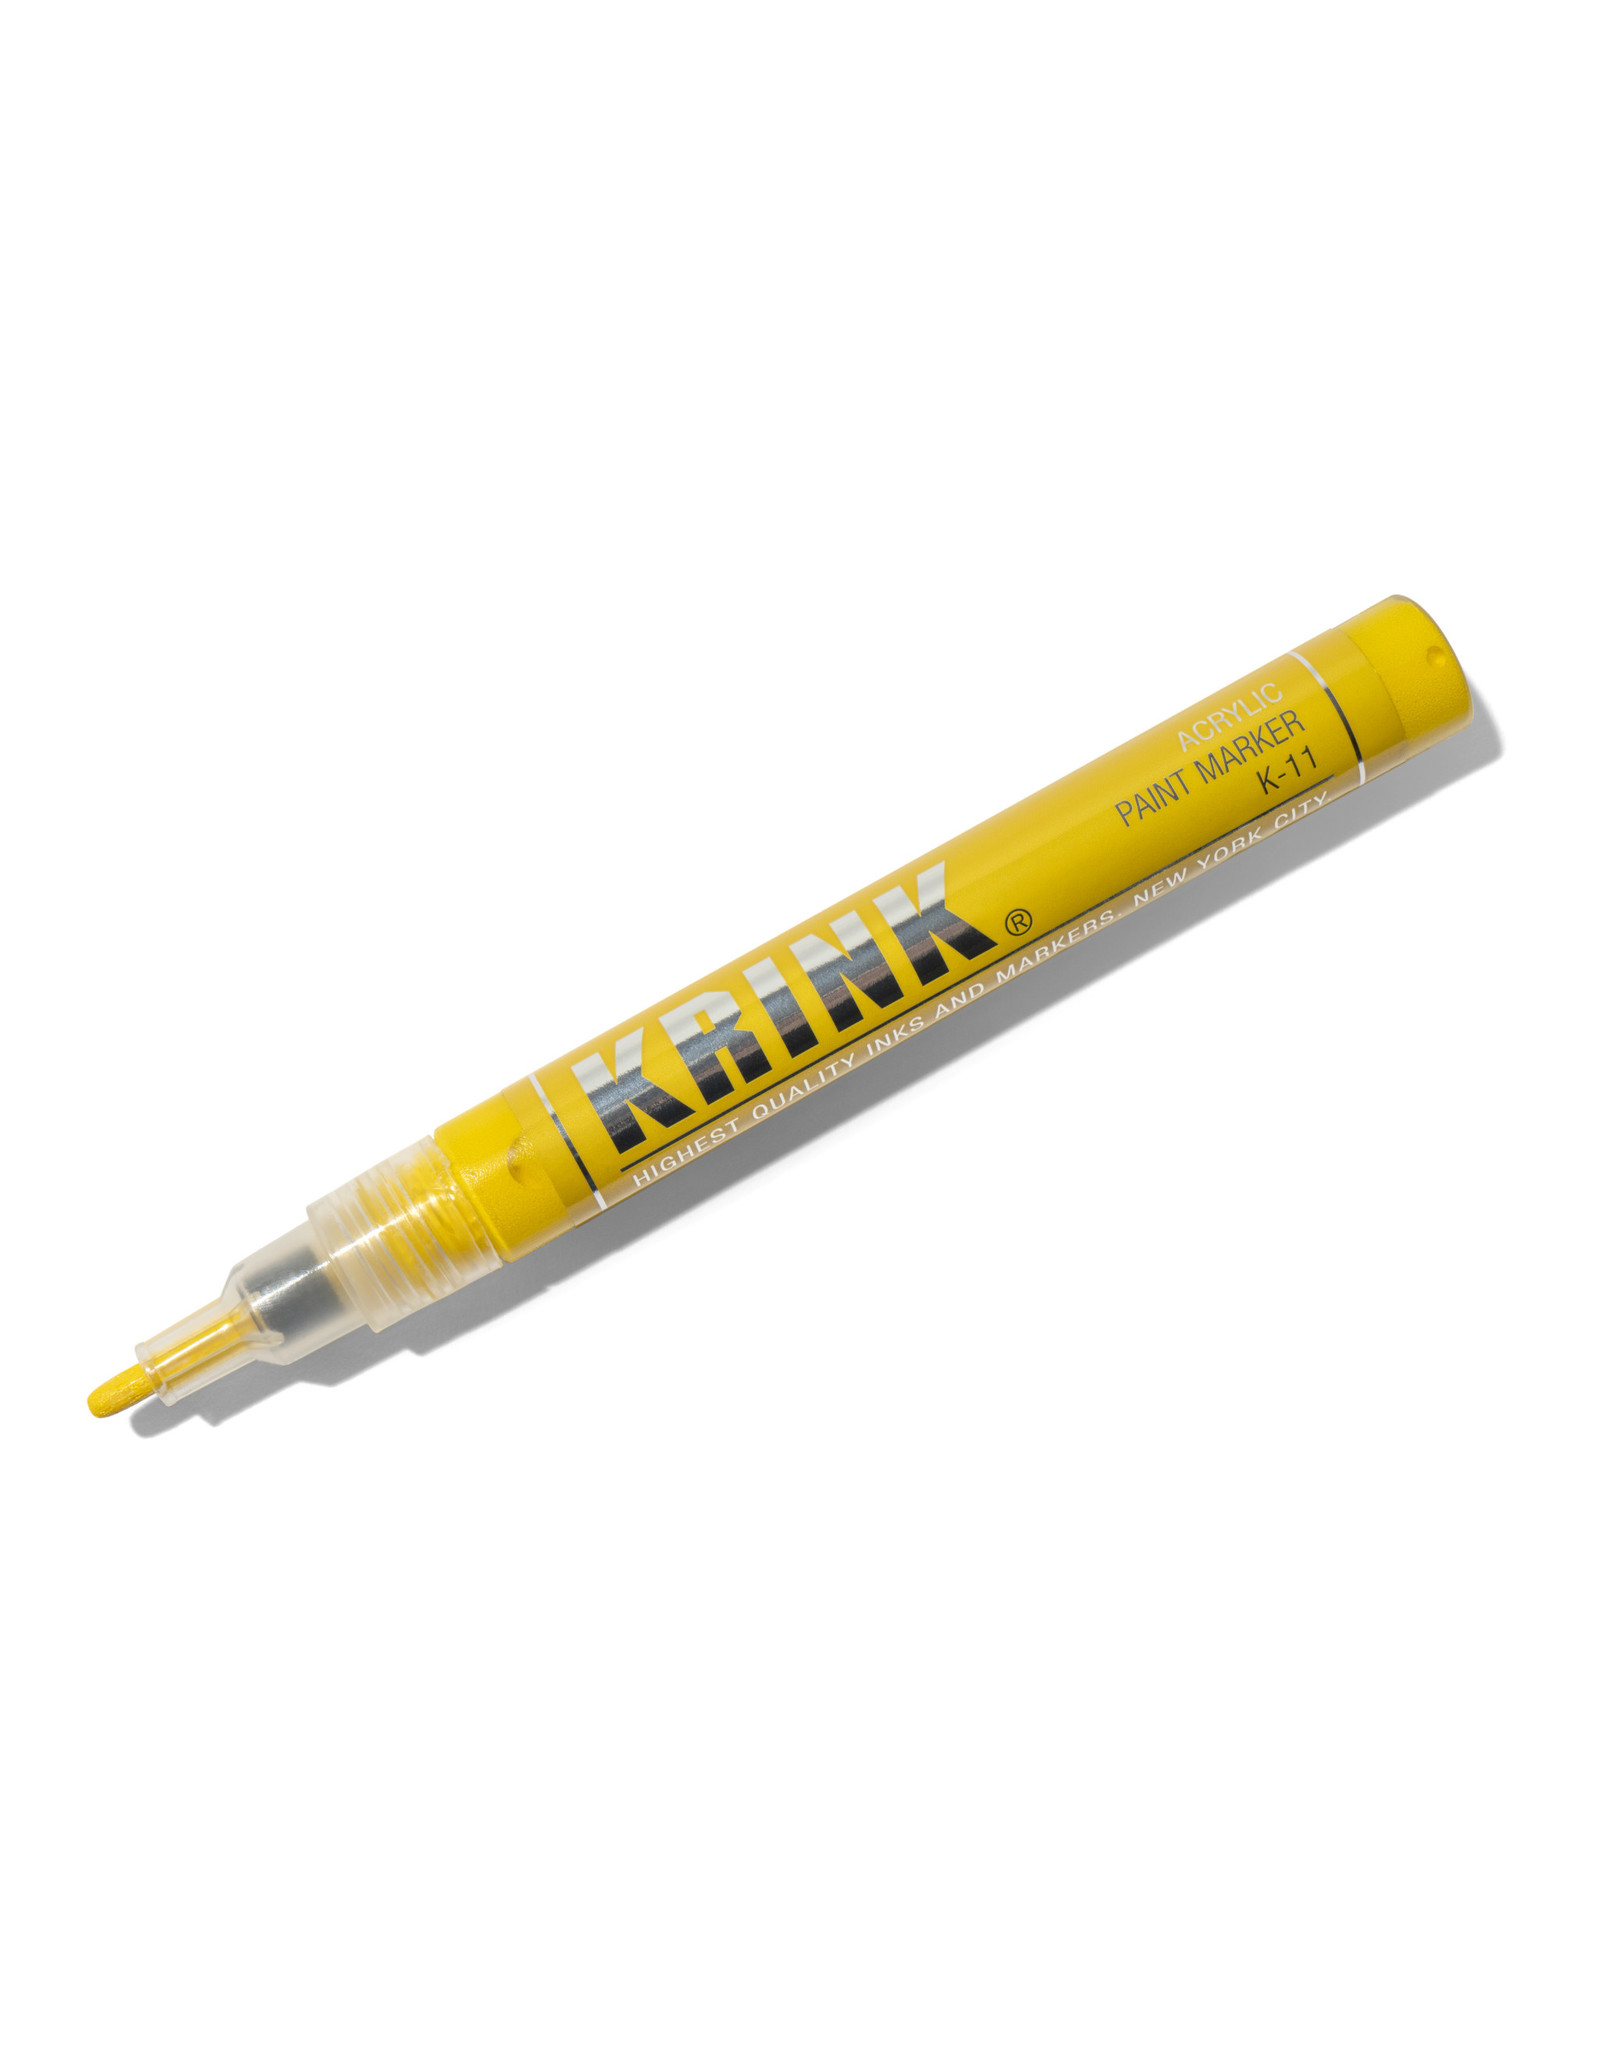 Krink Krink K-11 Acrylic Paint Marker, Yellow